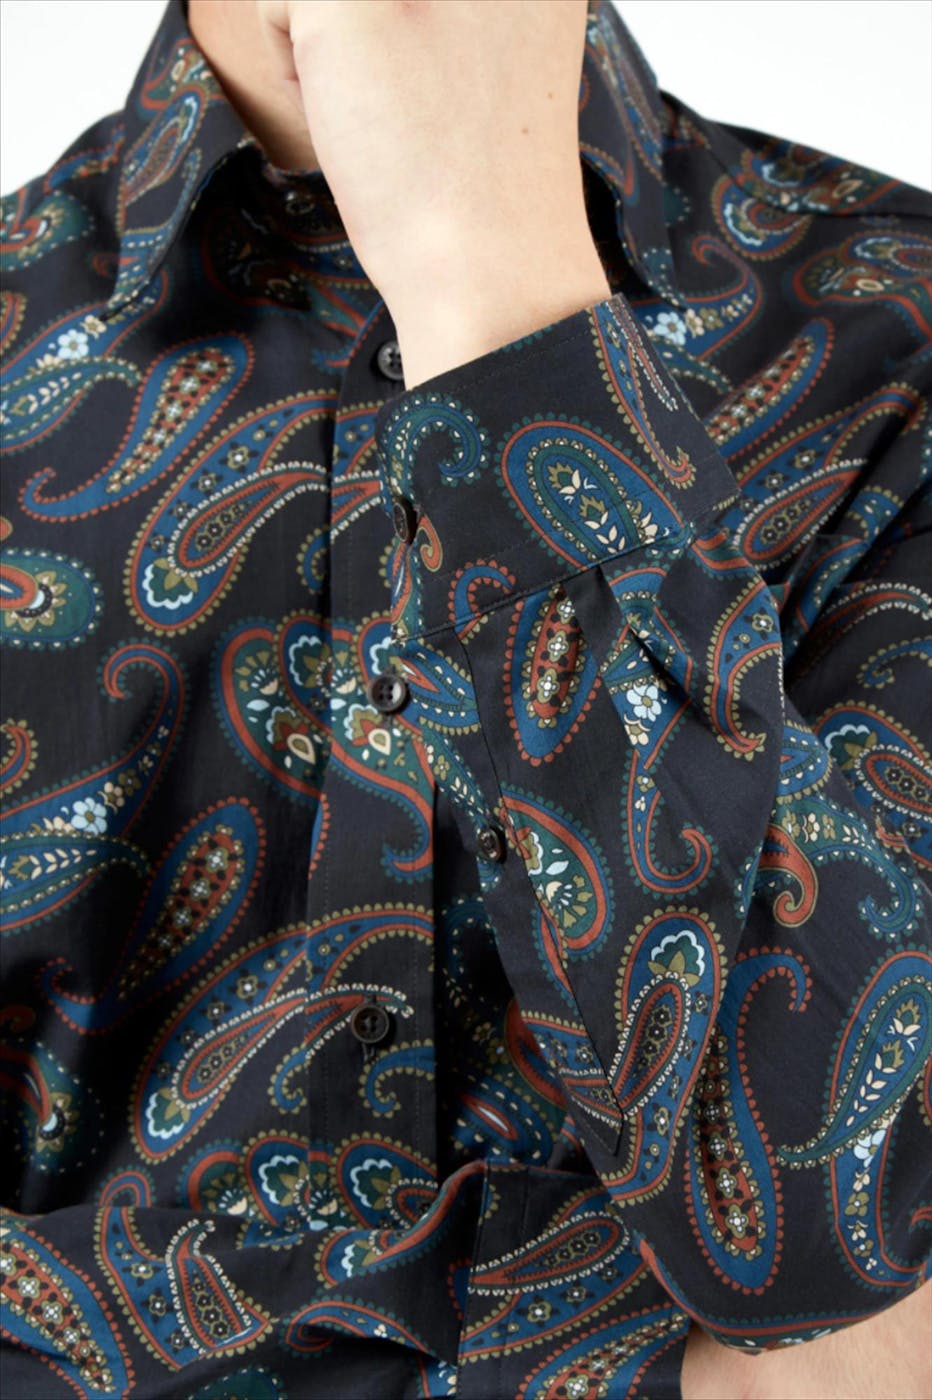 Ben Sherman - Zwart-multicolour regular fit paisley hemd